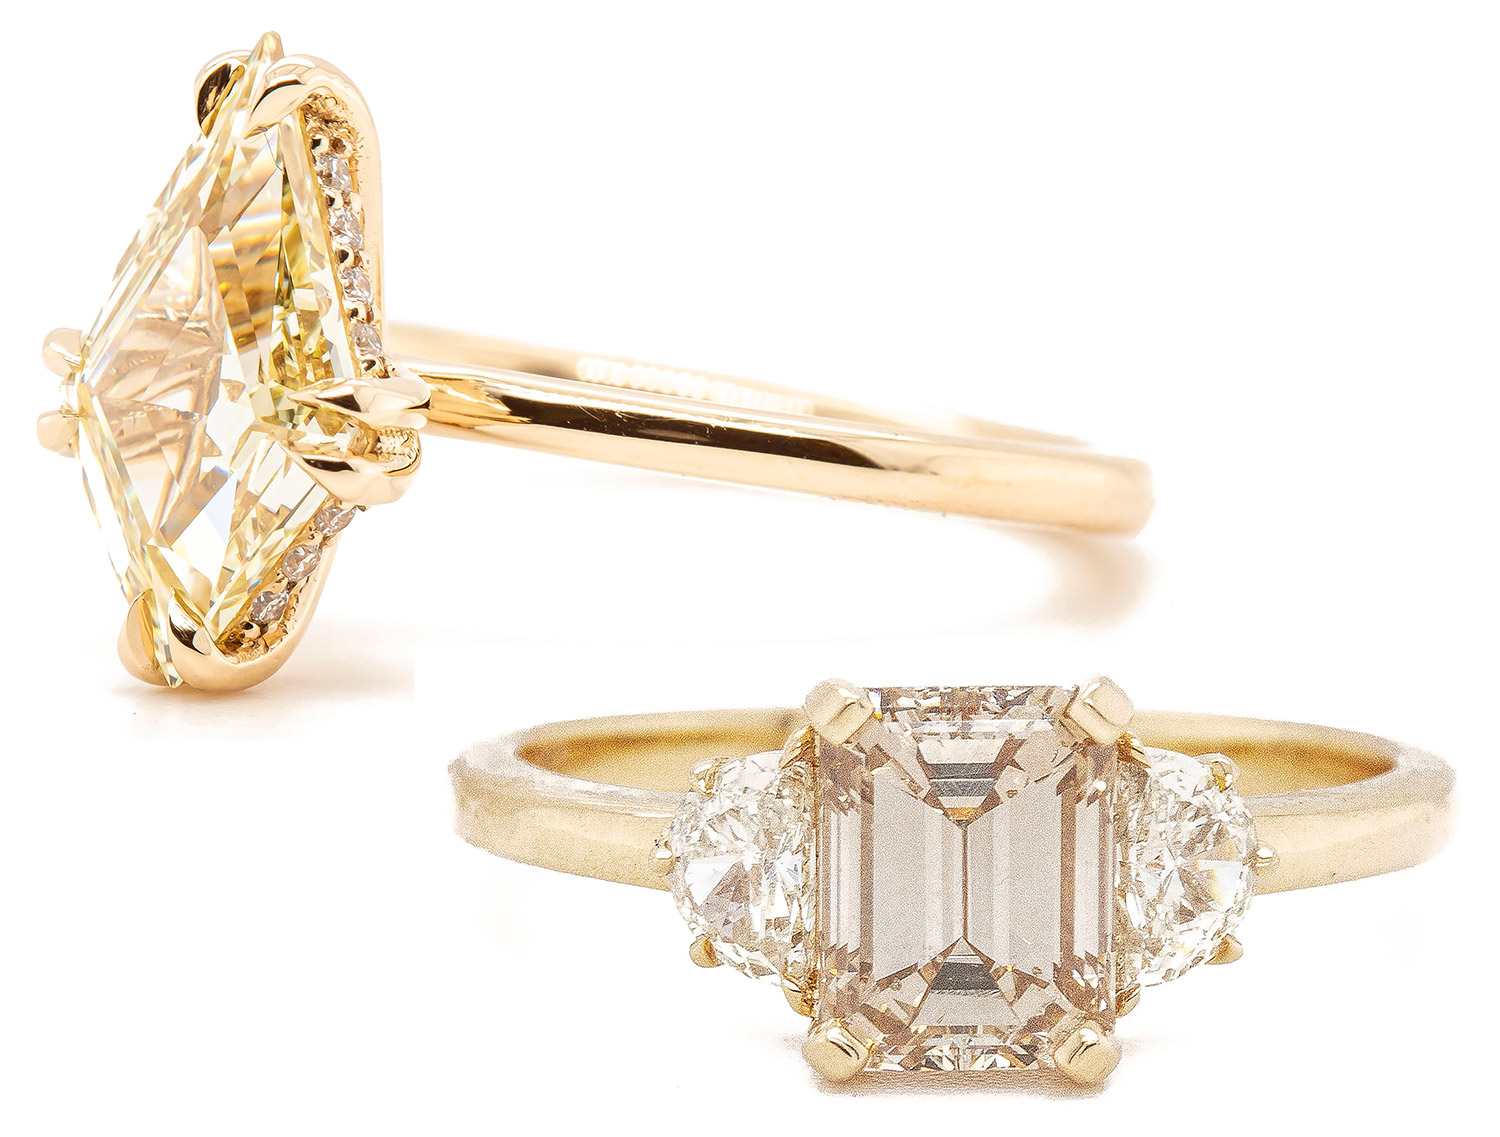 Rebecca Overmann Agenda and Suitor diamond rings